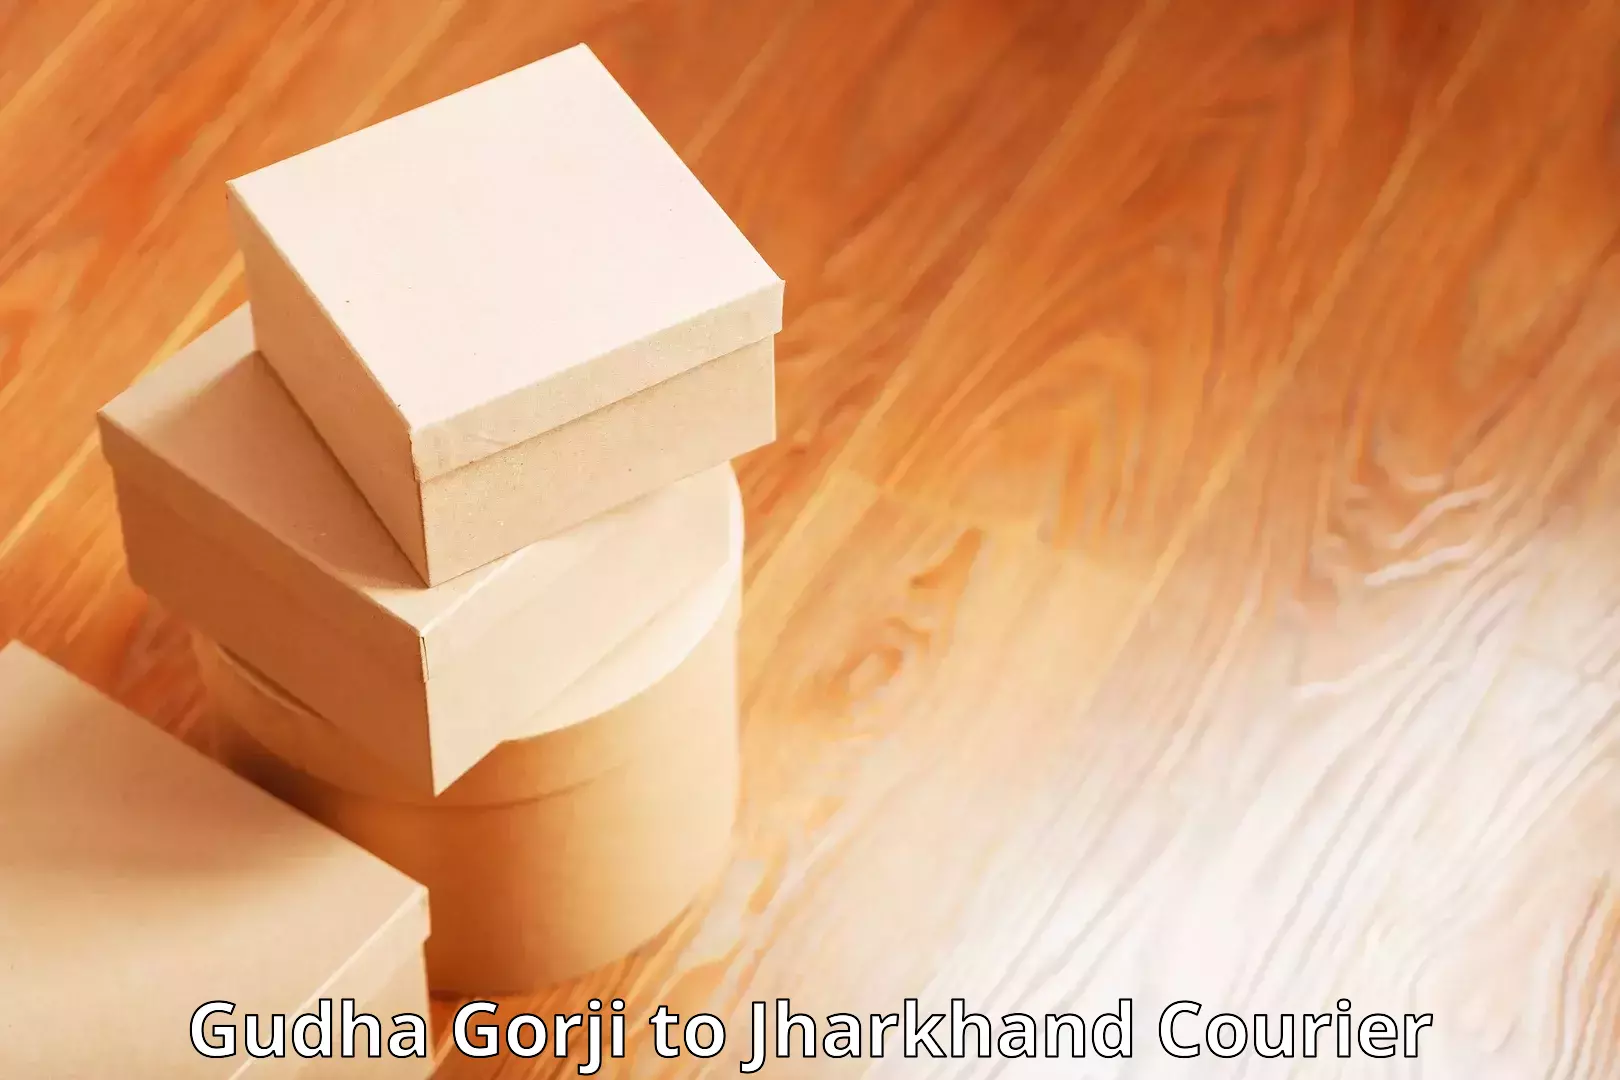 Specialized courier services in Gudha Gorji to Godda